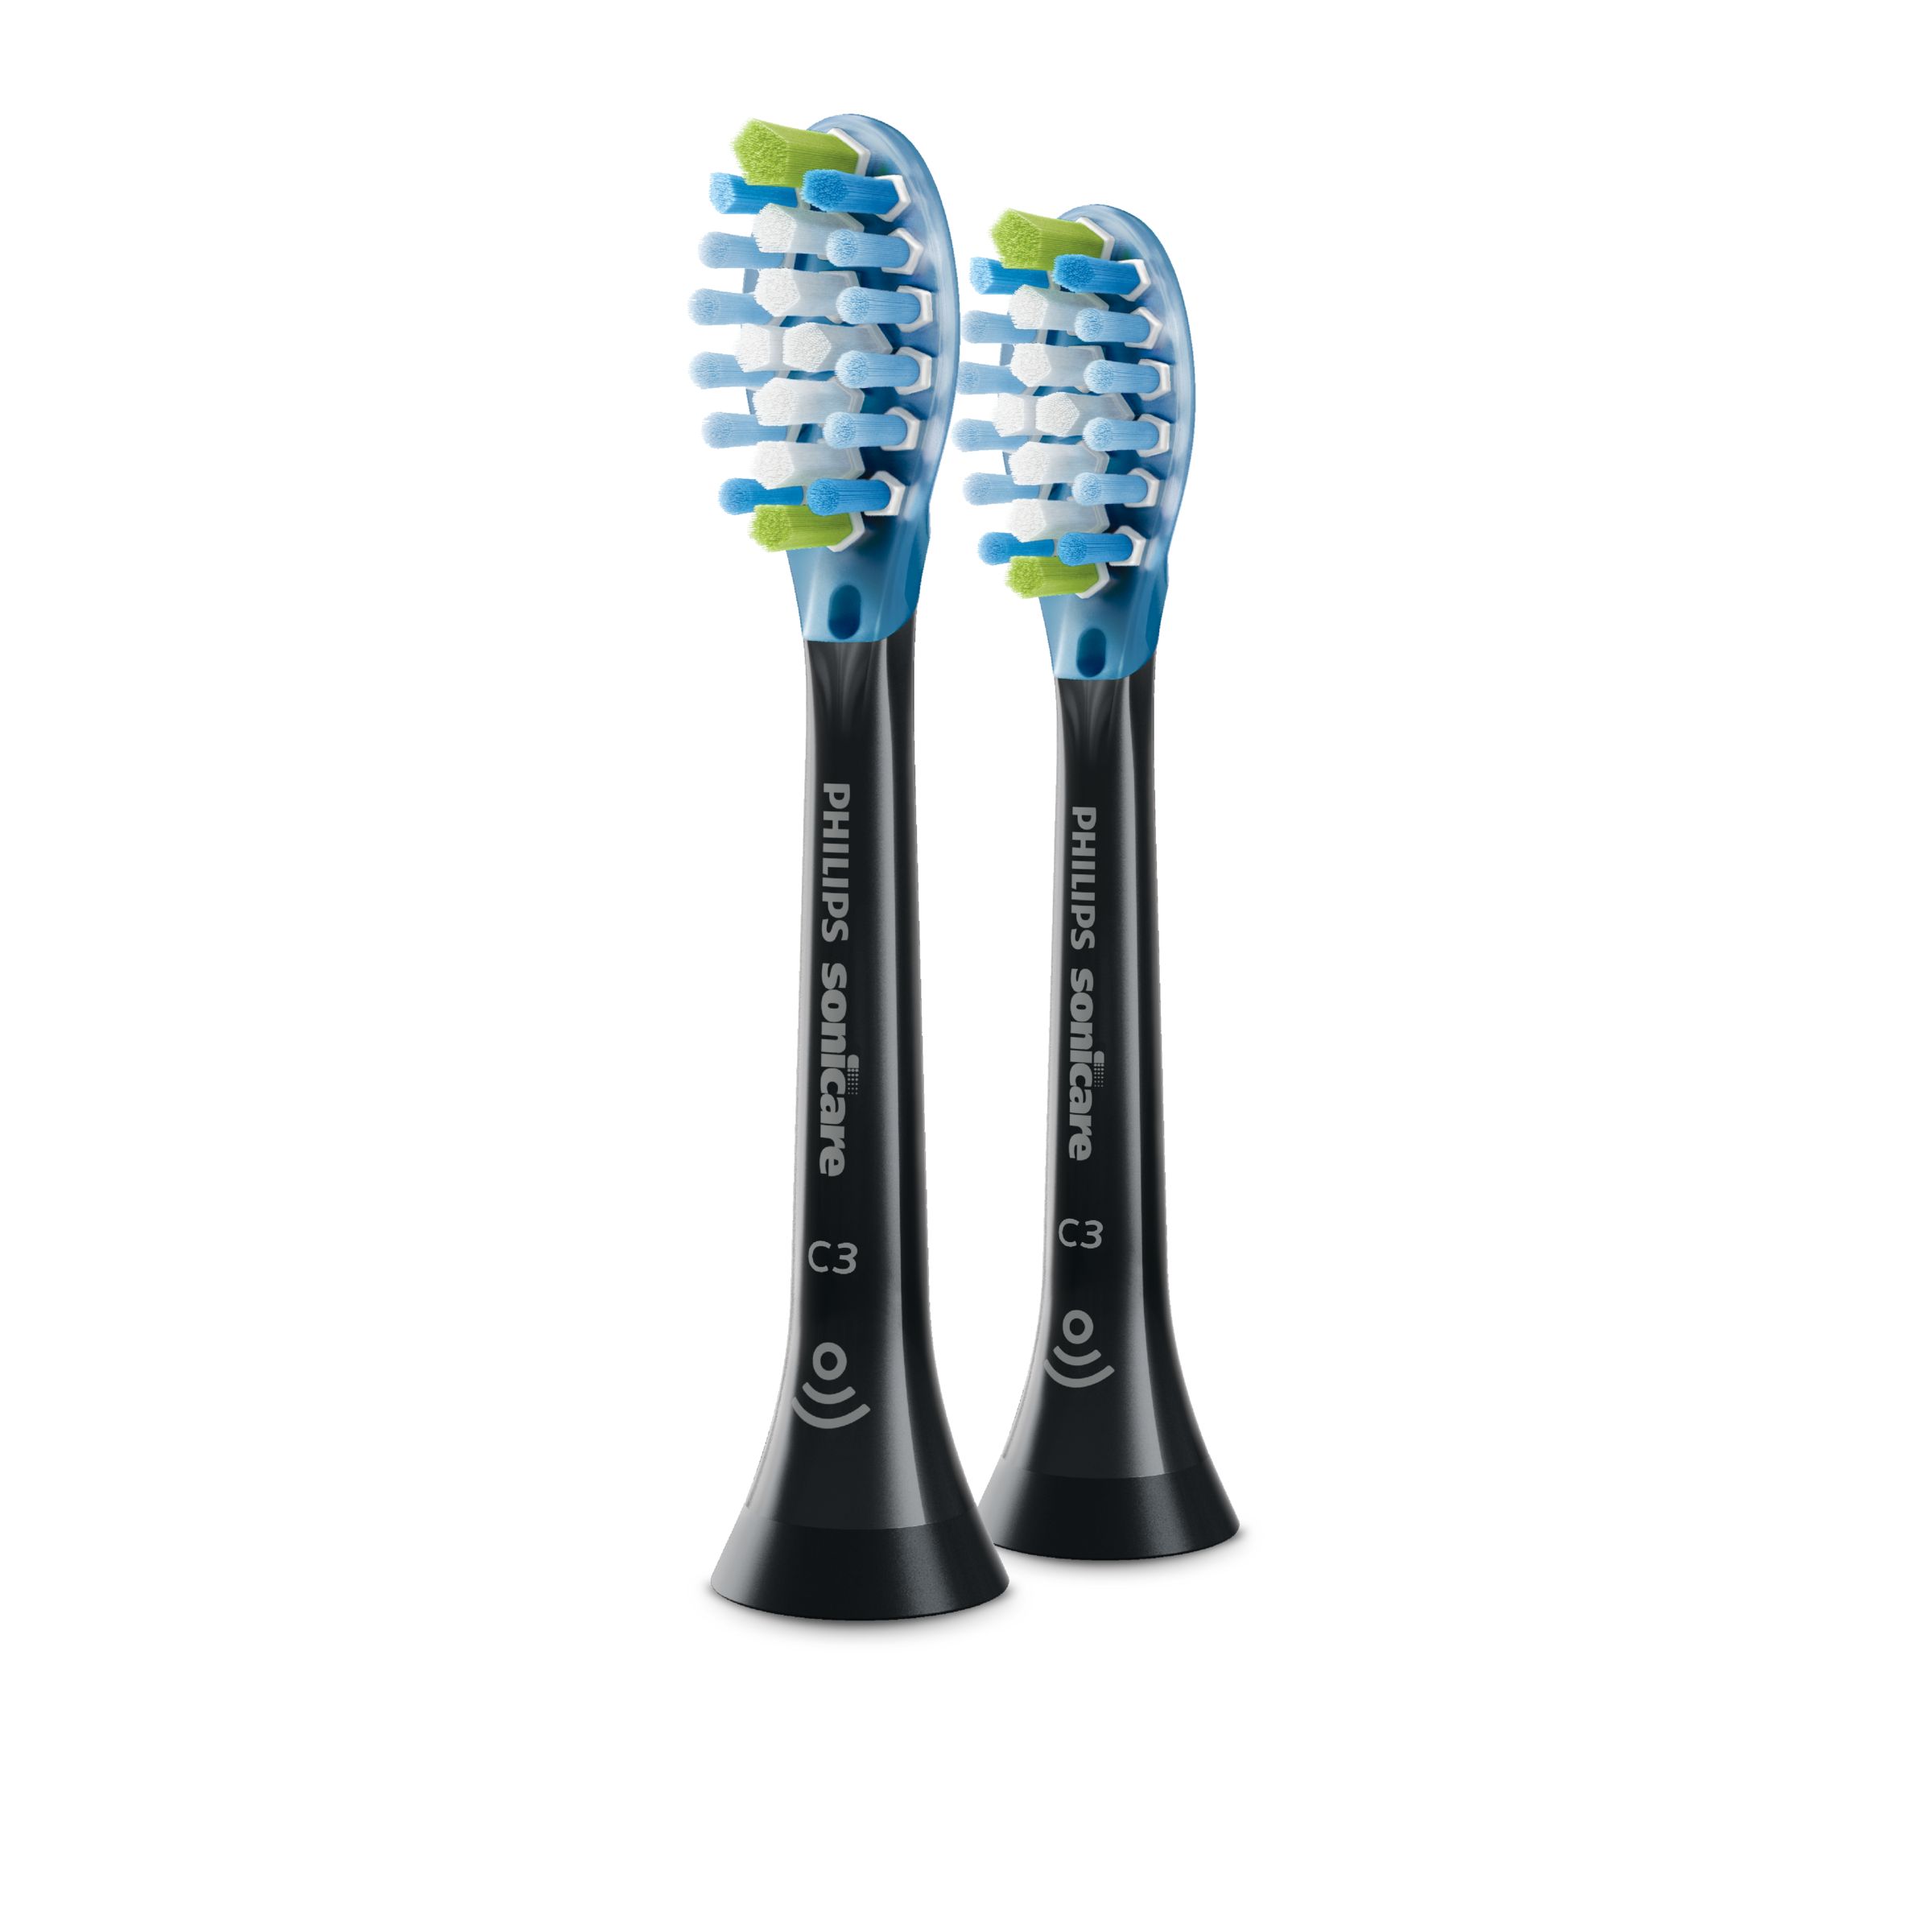 Image of Philips C3 Premium Plaque Control - Standard sonic toothbrush heads - HX9042/95